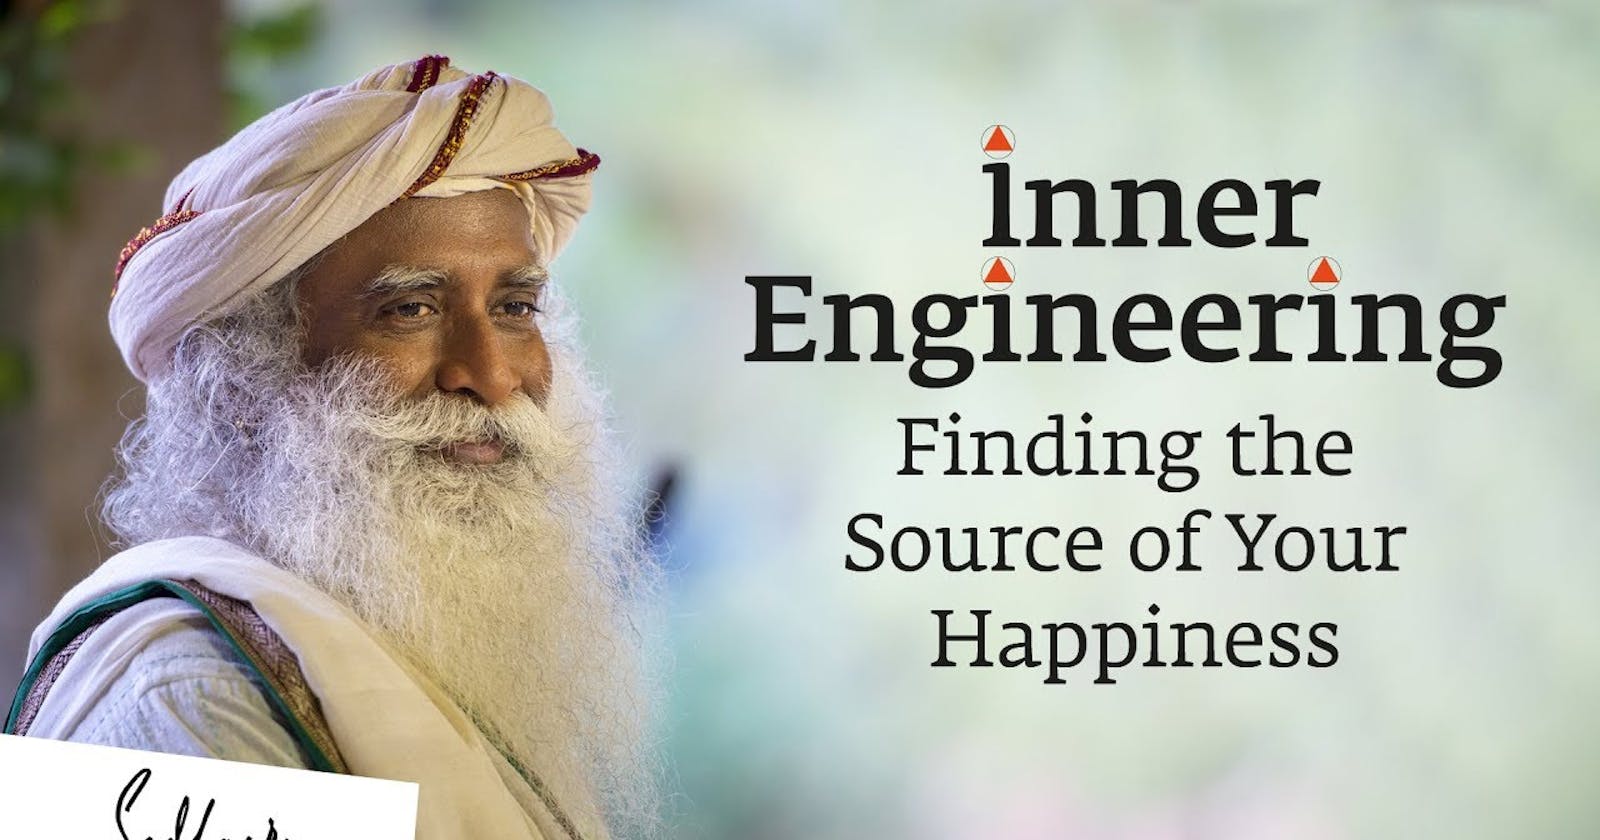 Inner Engineering: A Yogi's Guide to Joy" by Sadhguru